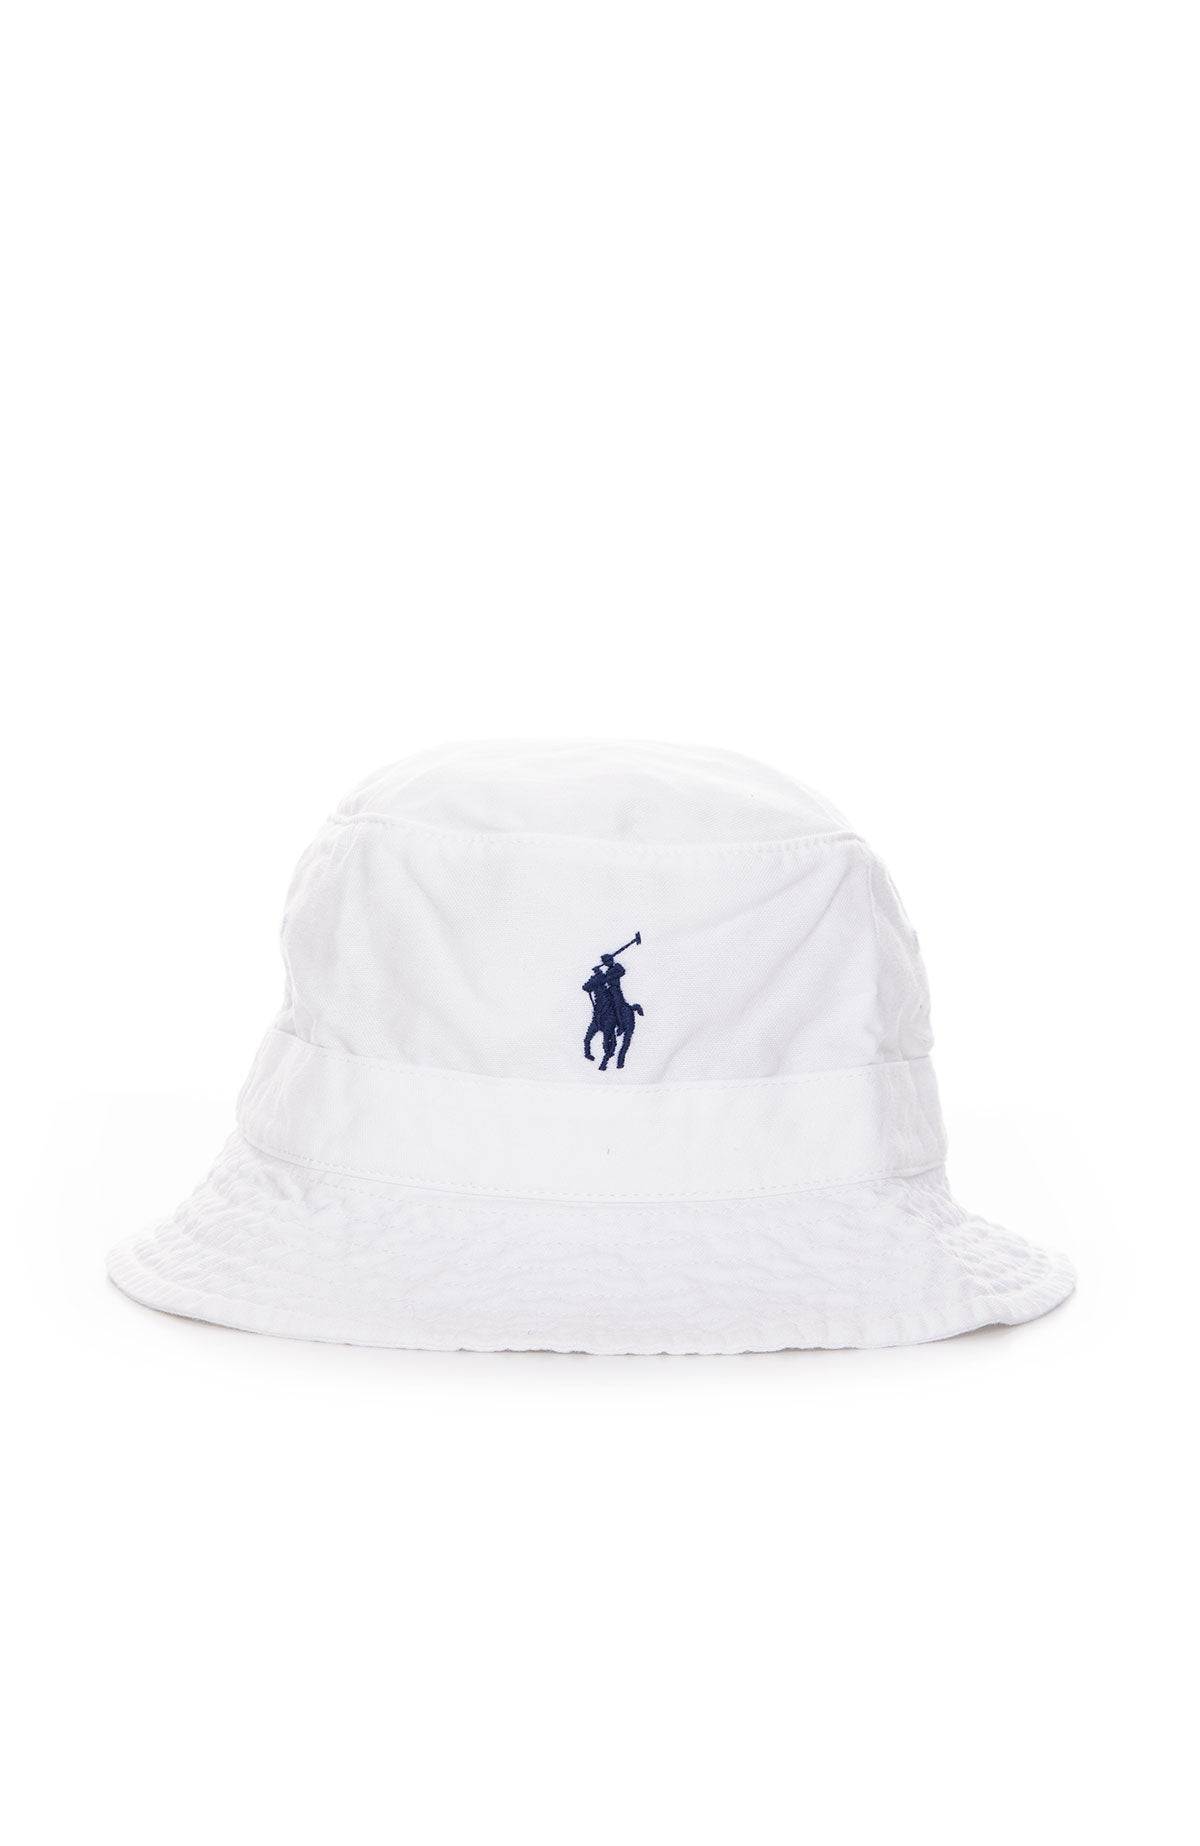 polo ralph lauren bucket hat white